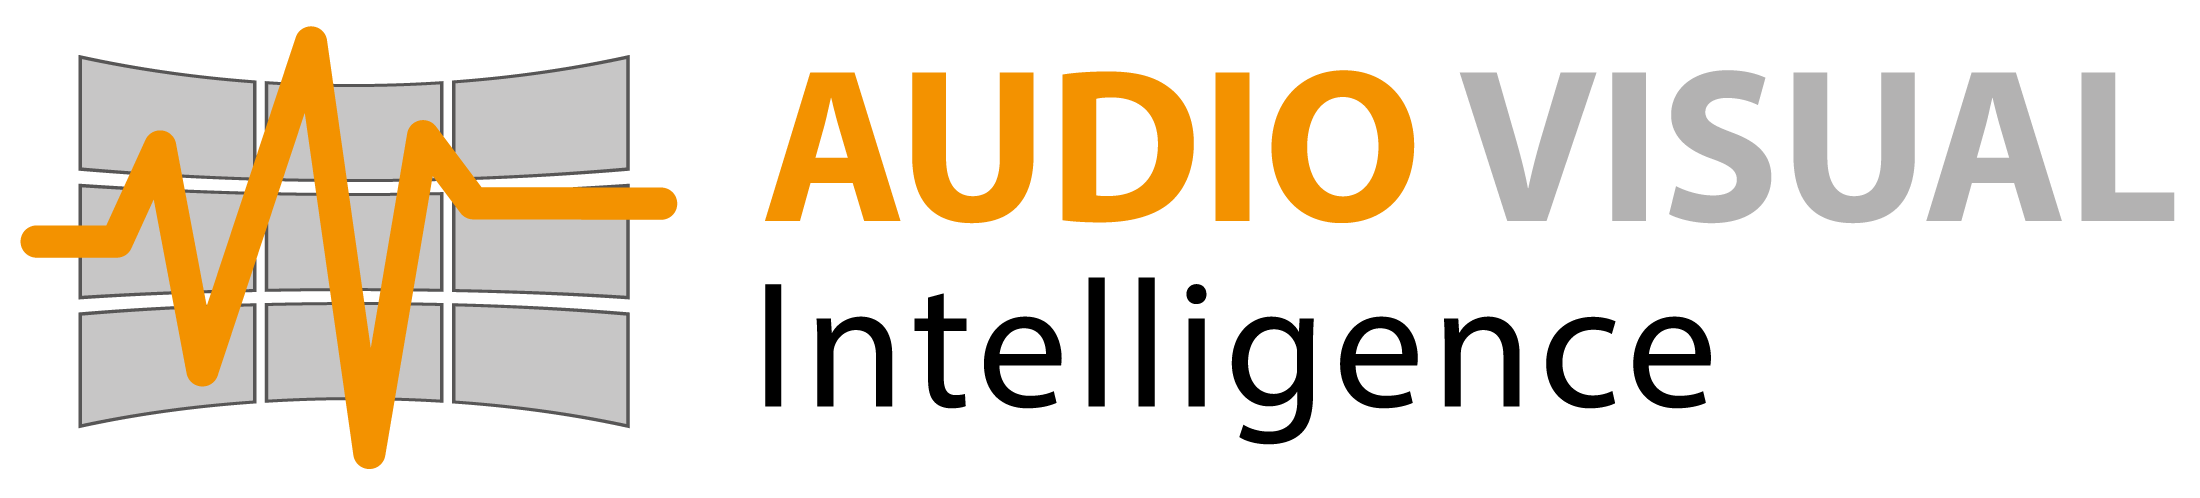 Audio Visual Intelligence LTD logo